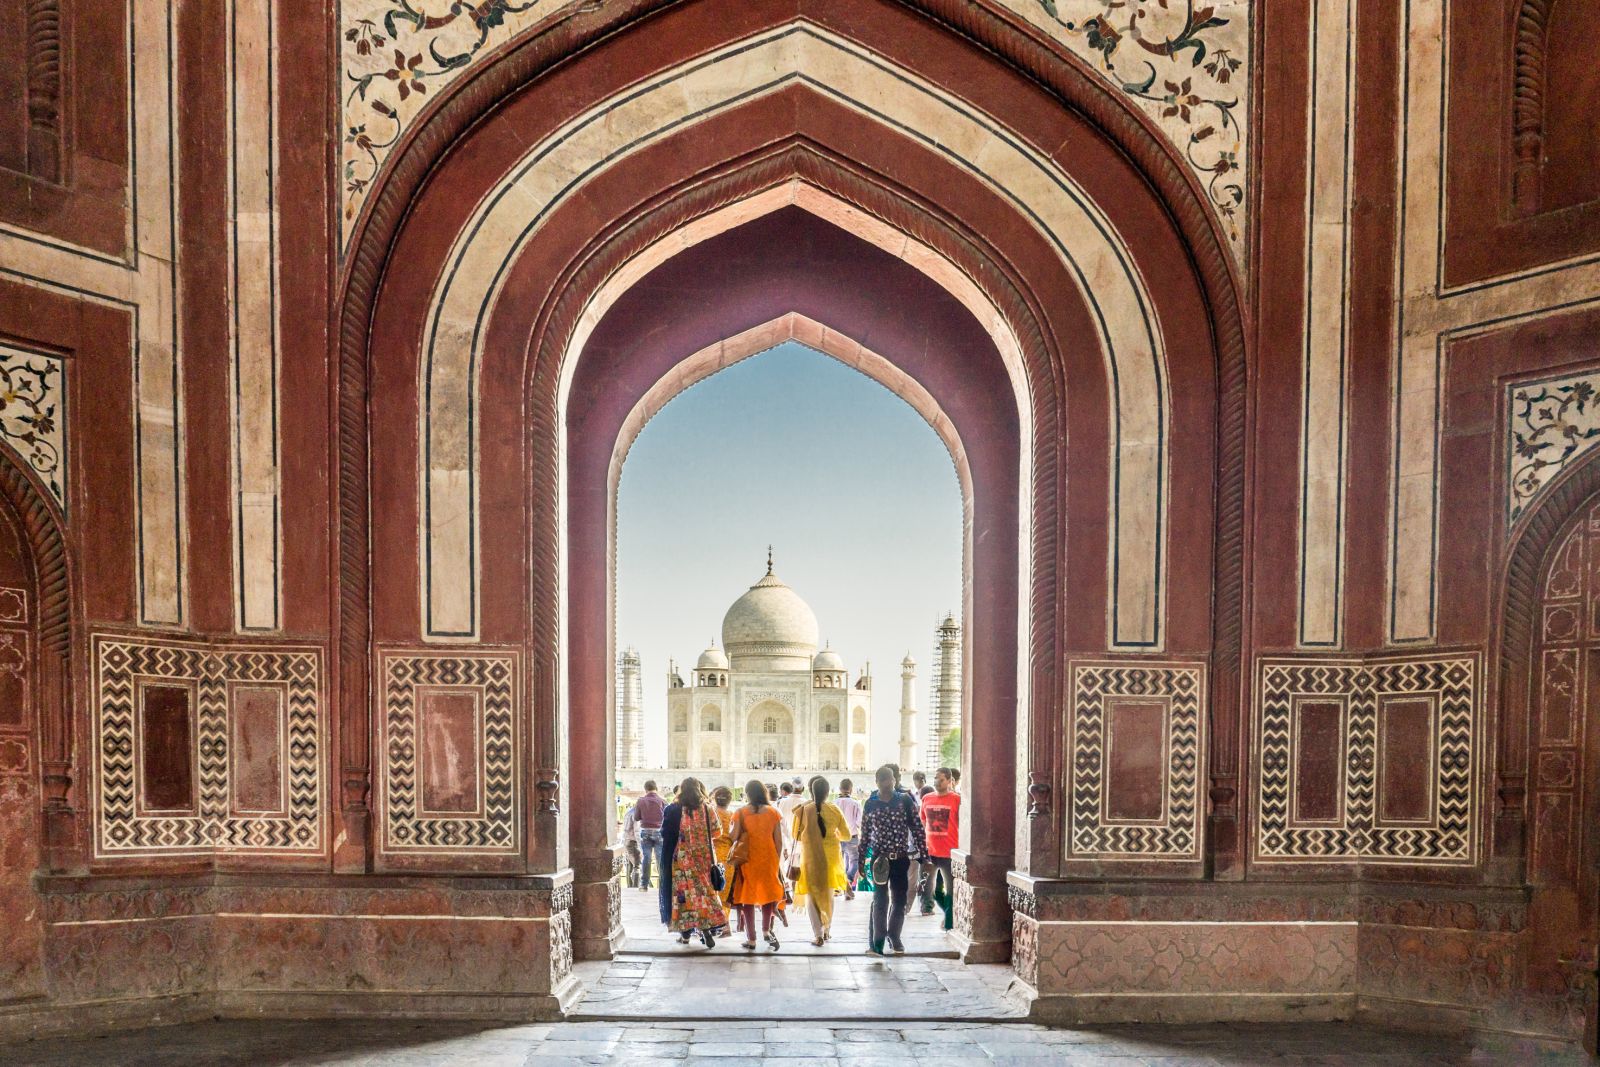 The ornate entrance to the Taj Mahal complex in India